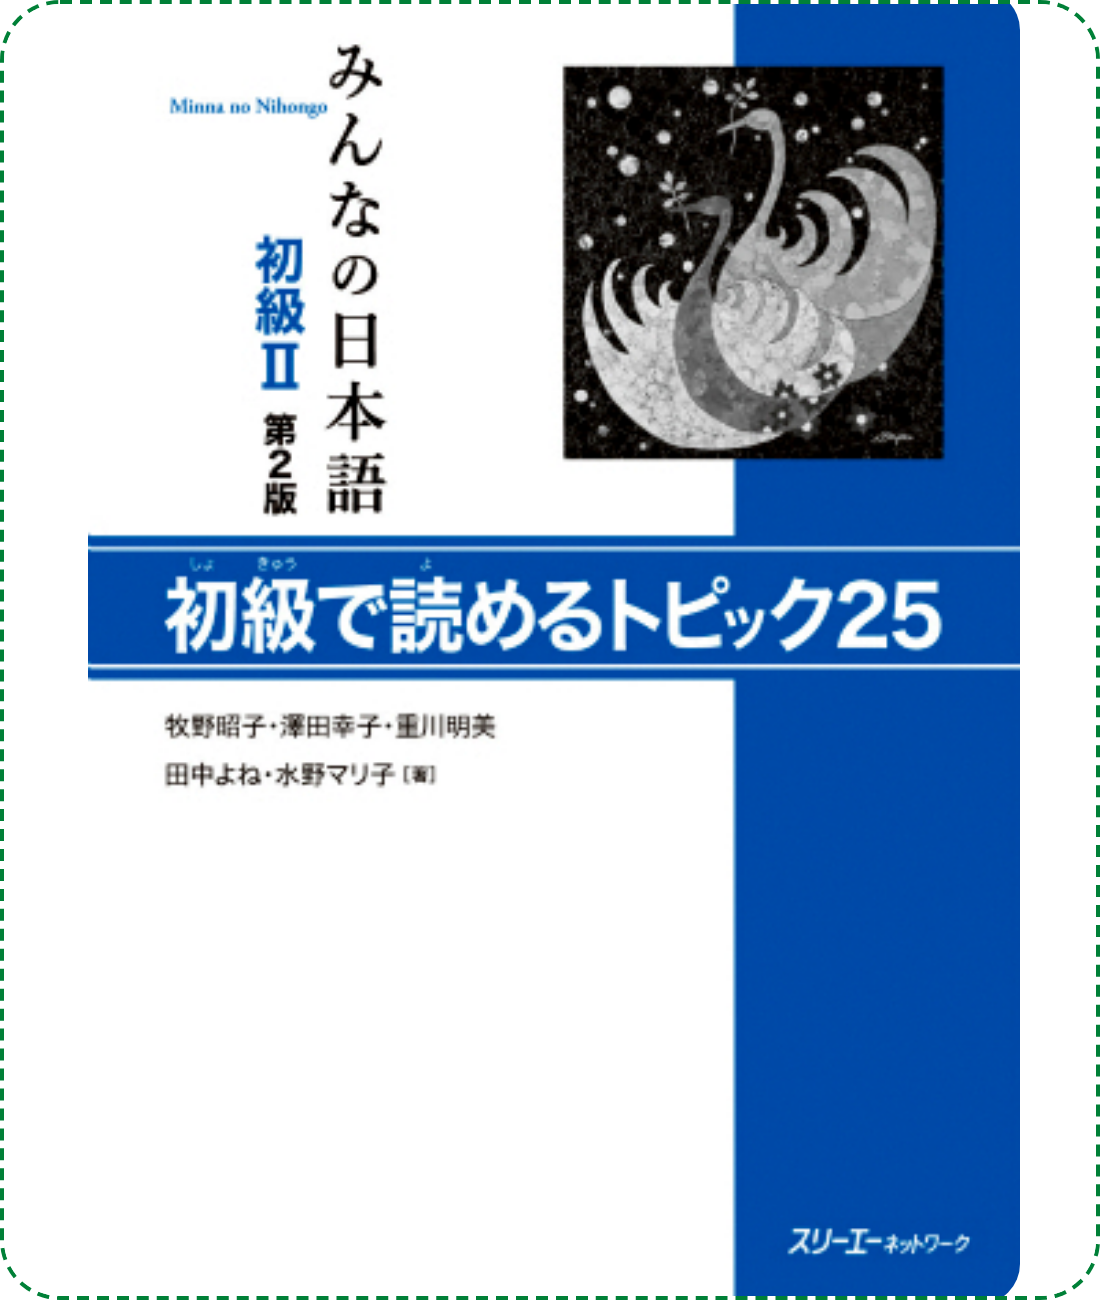 Giáo trình Minano Nihongo 2 - Quyển Đọc Hiểu Shokyuude Yomeru Topikku 25